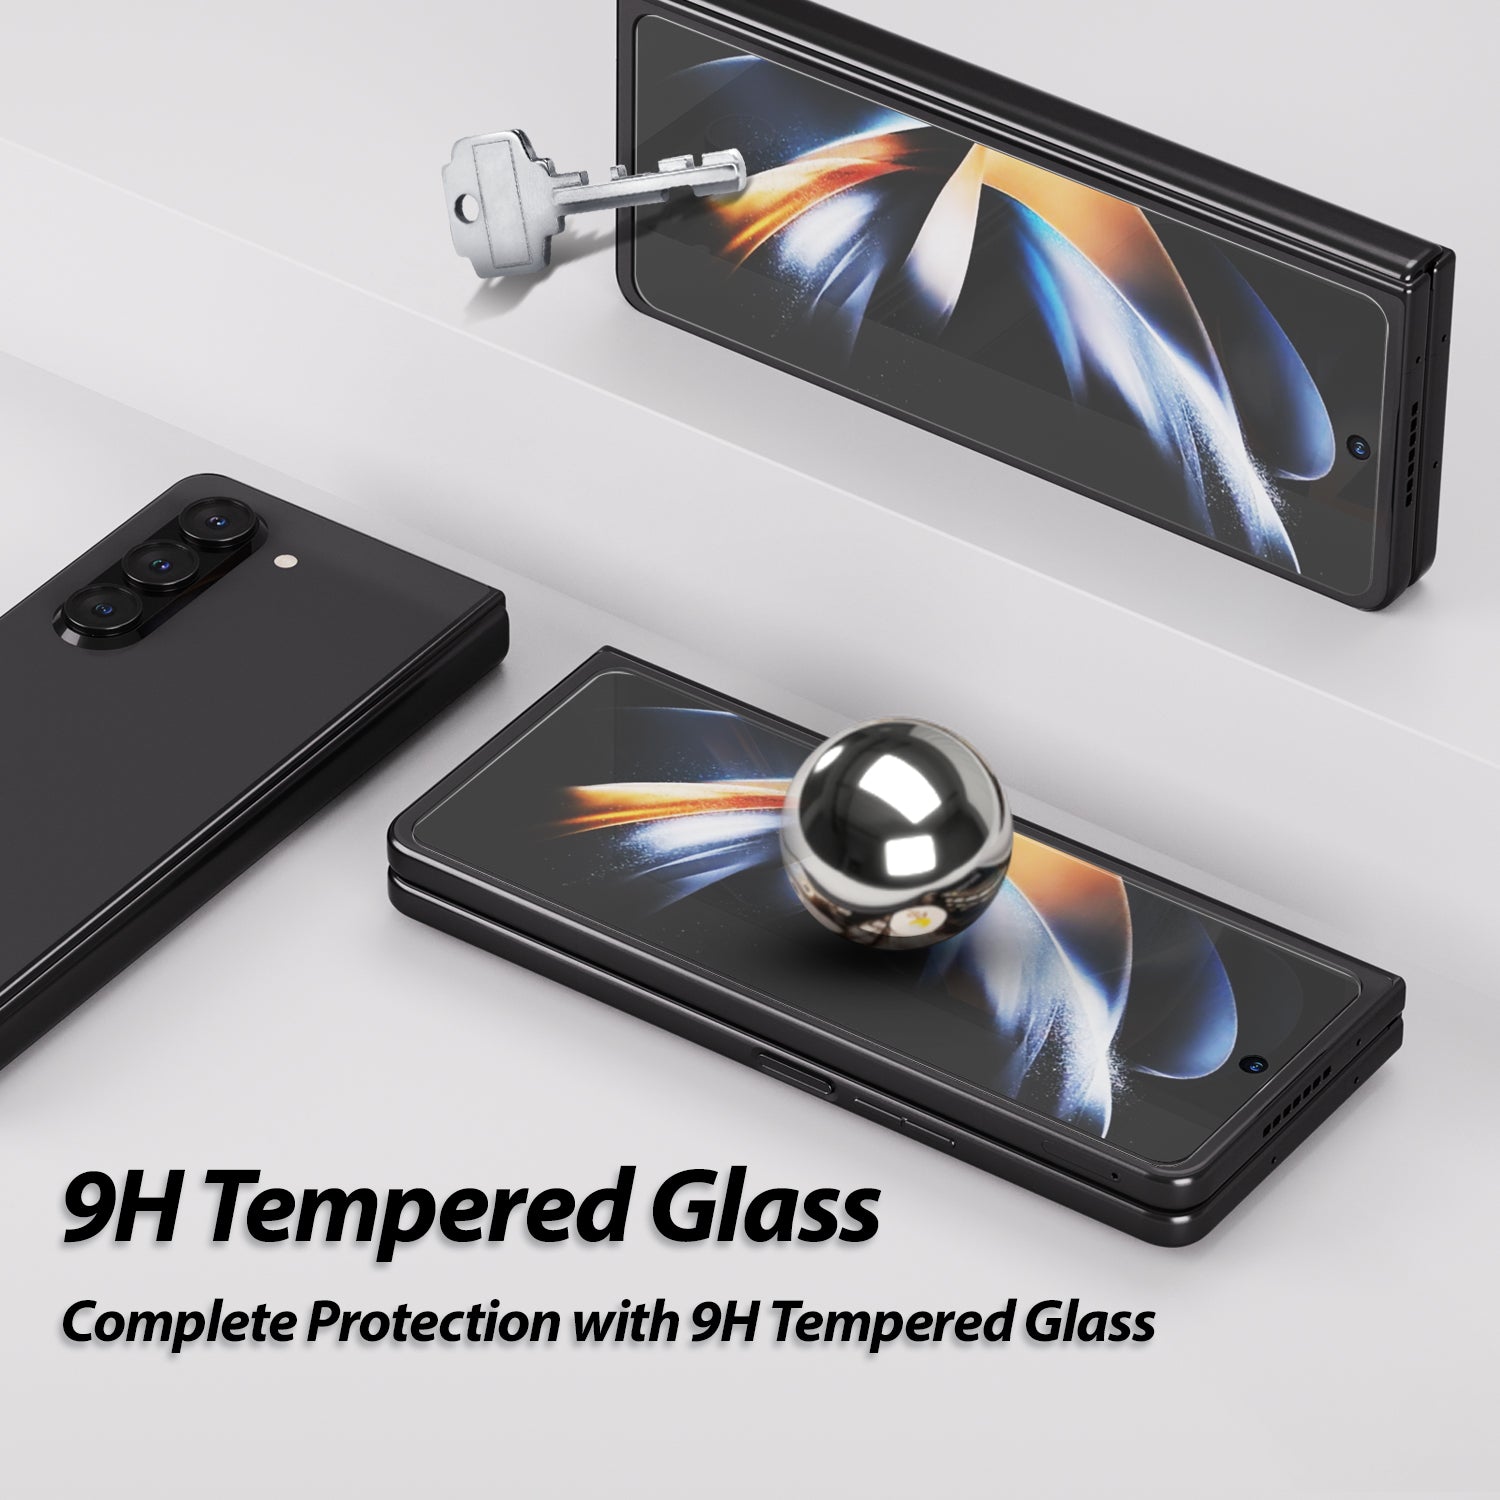 Dome Glass Screen Protector Samsung Galaxy Z Fold 5 (2 piezas)